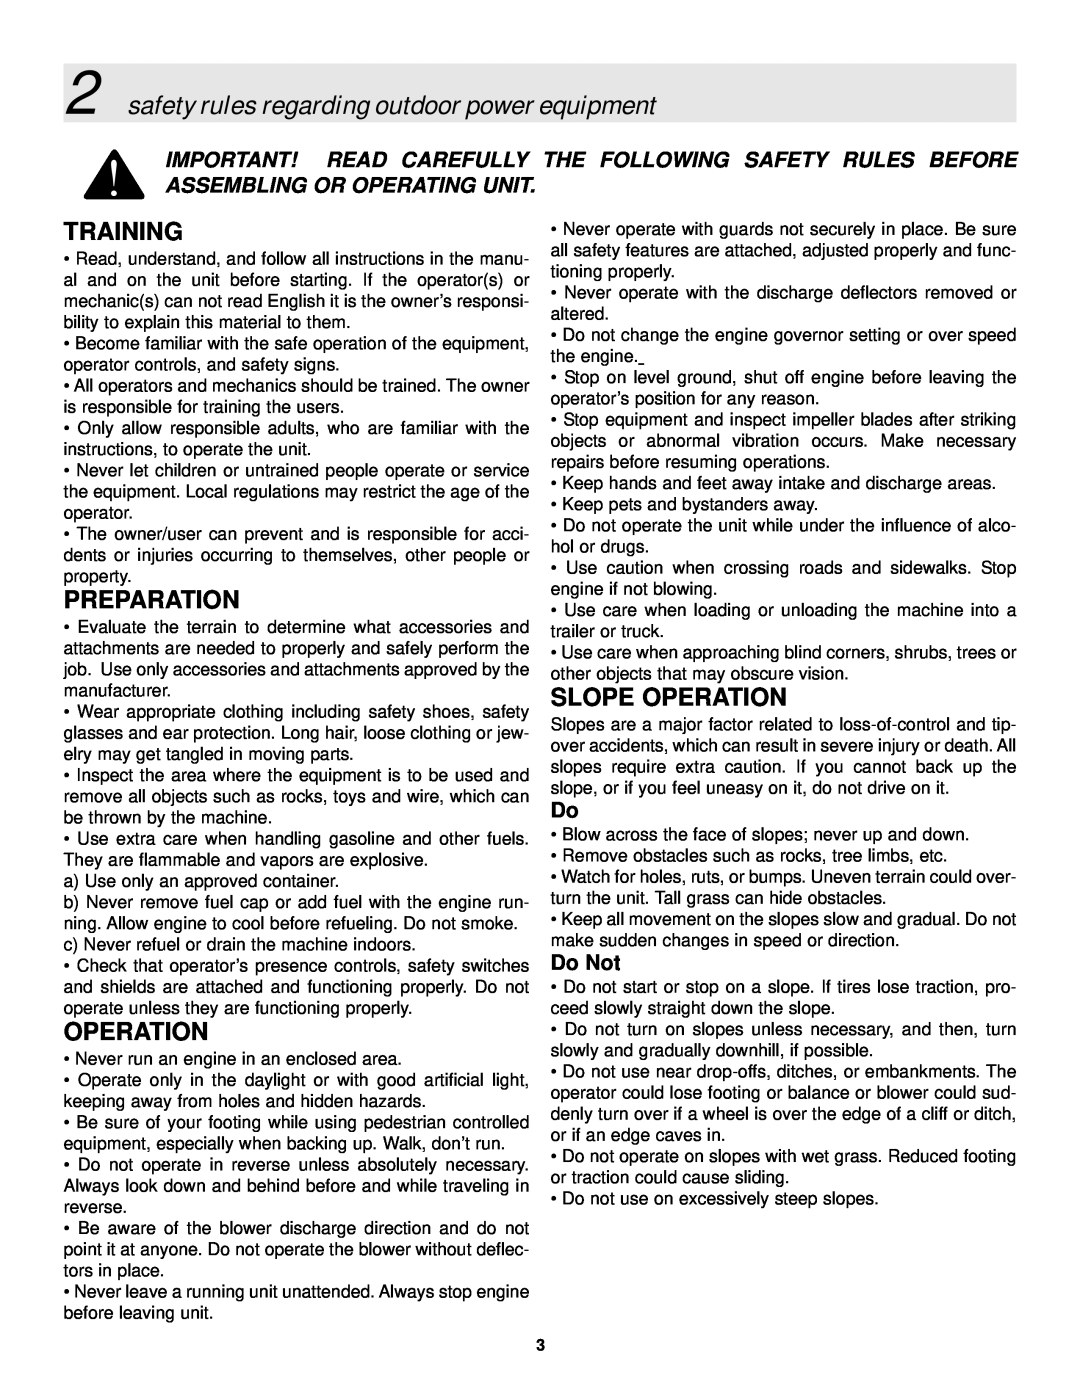 Snapper ELBC6151BV safety rules regarding outdoor power equipment, Training, Preparation, Slope Operation, Do Not 